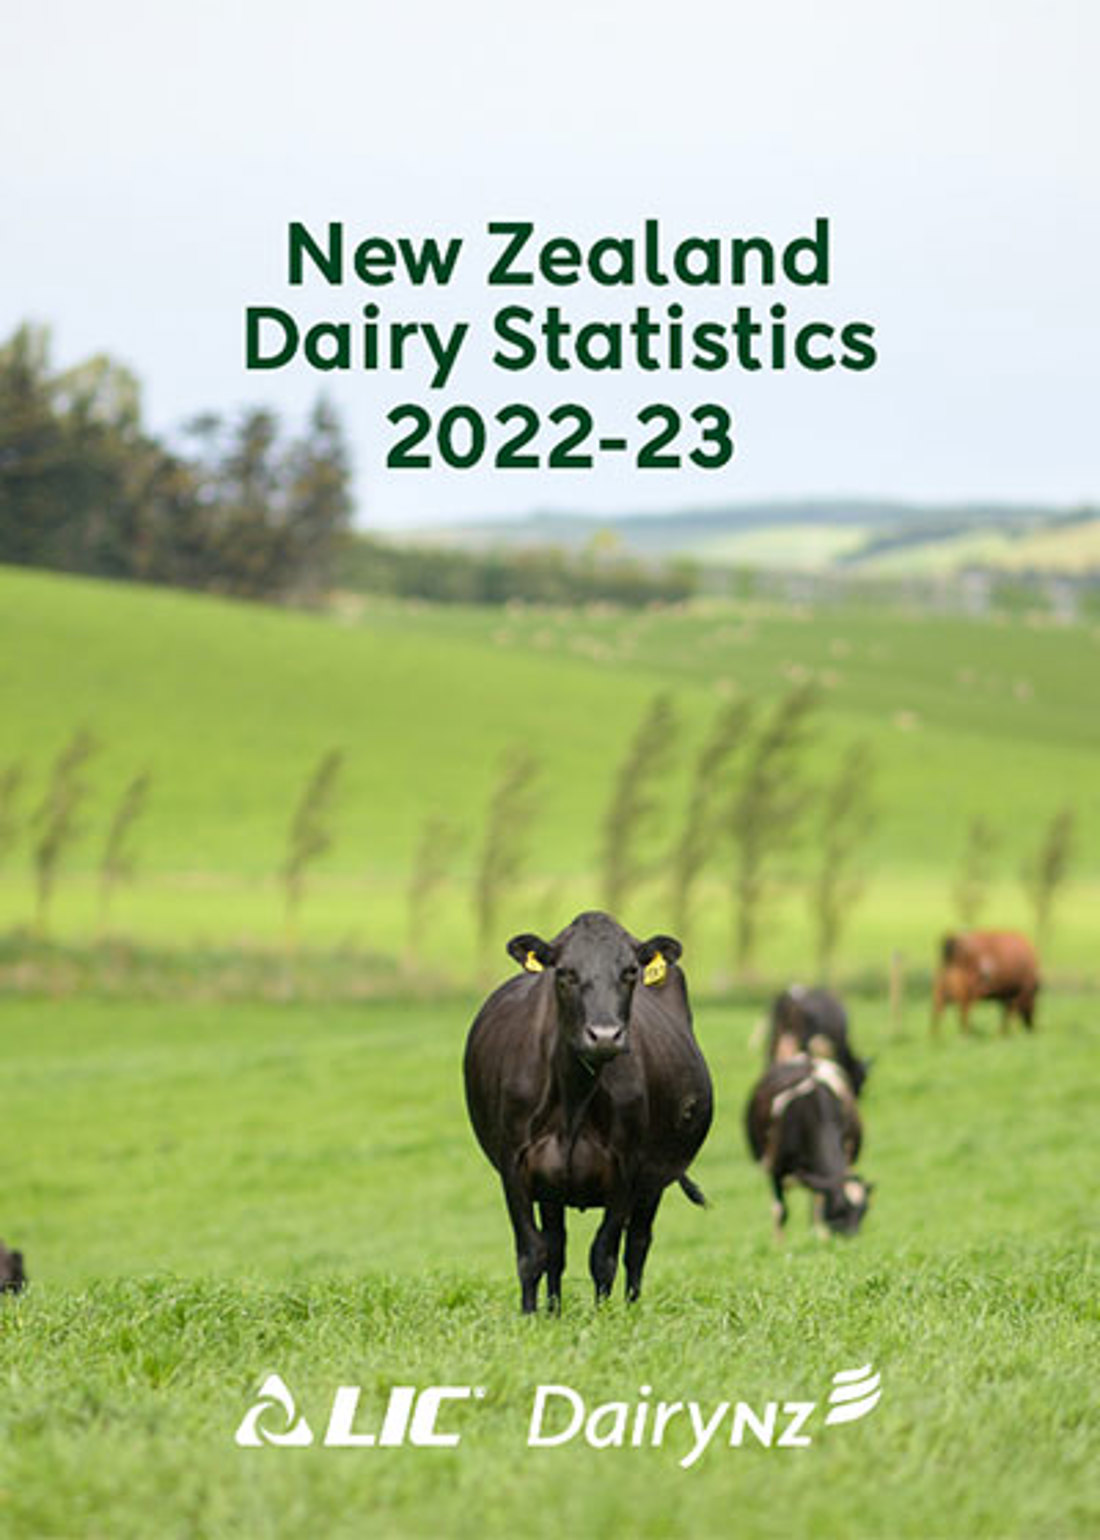 Nz Dairy Stats 2022 23 Image